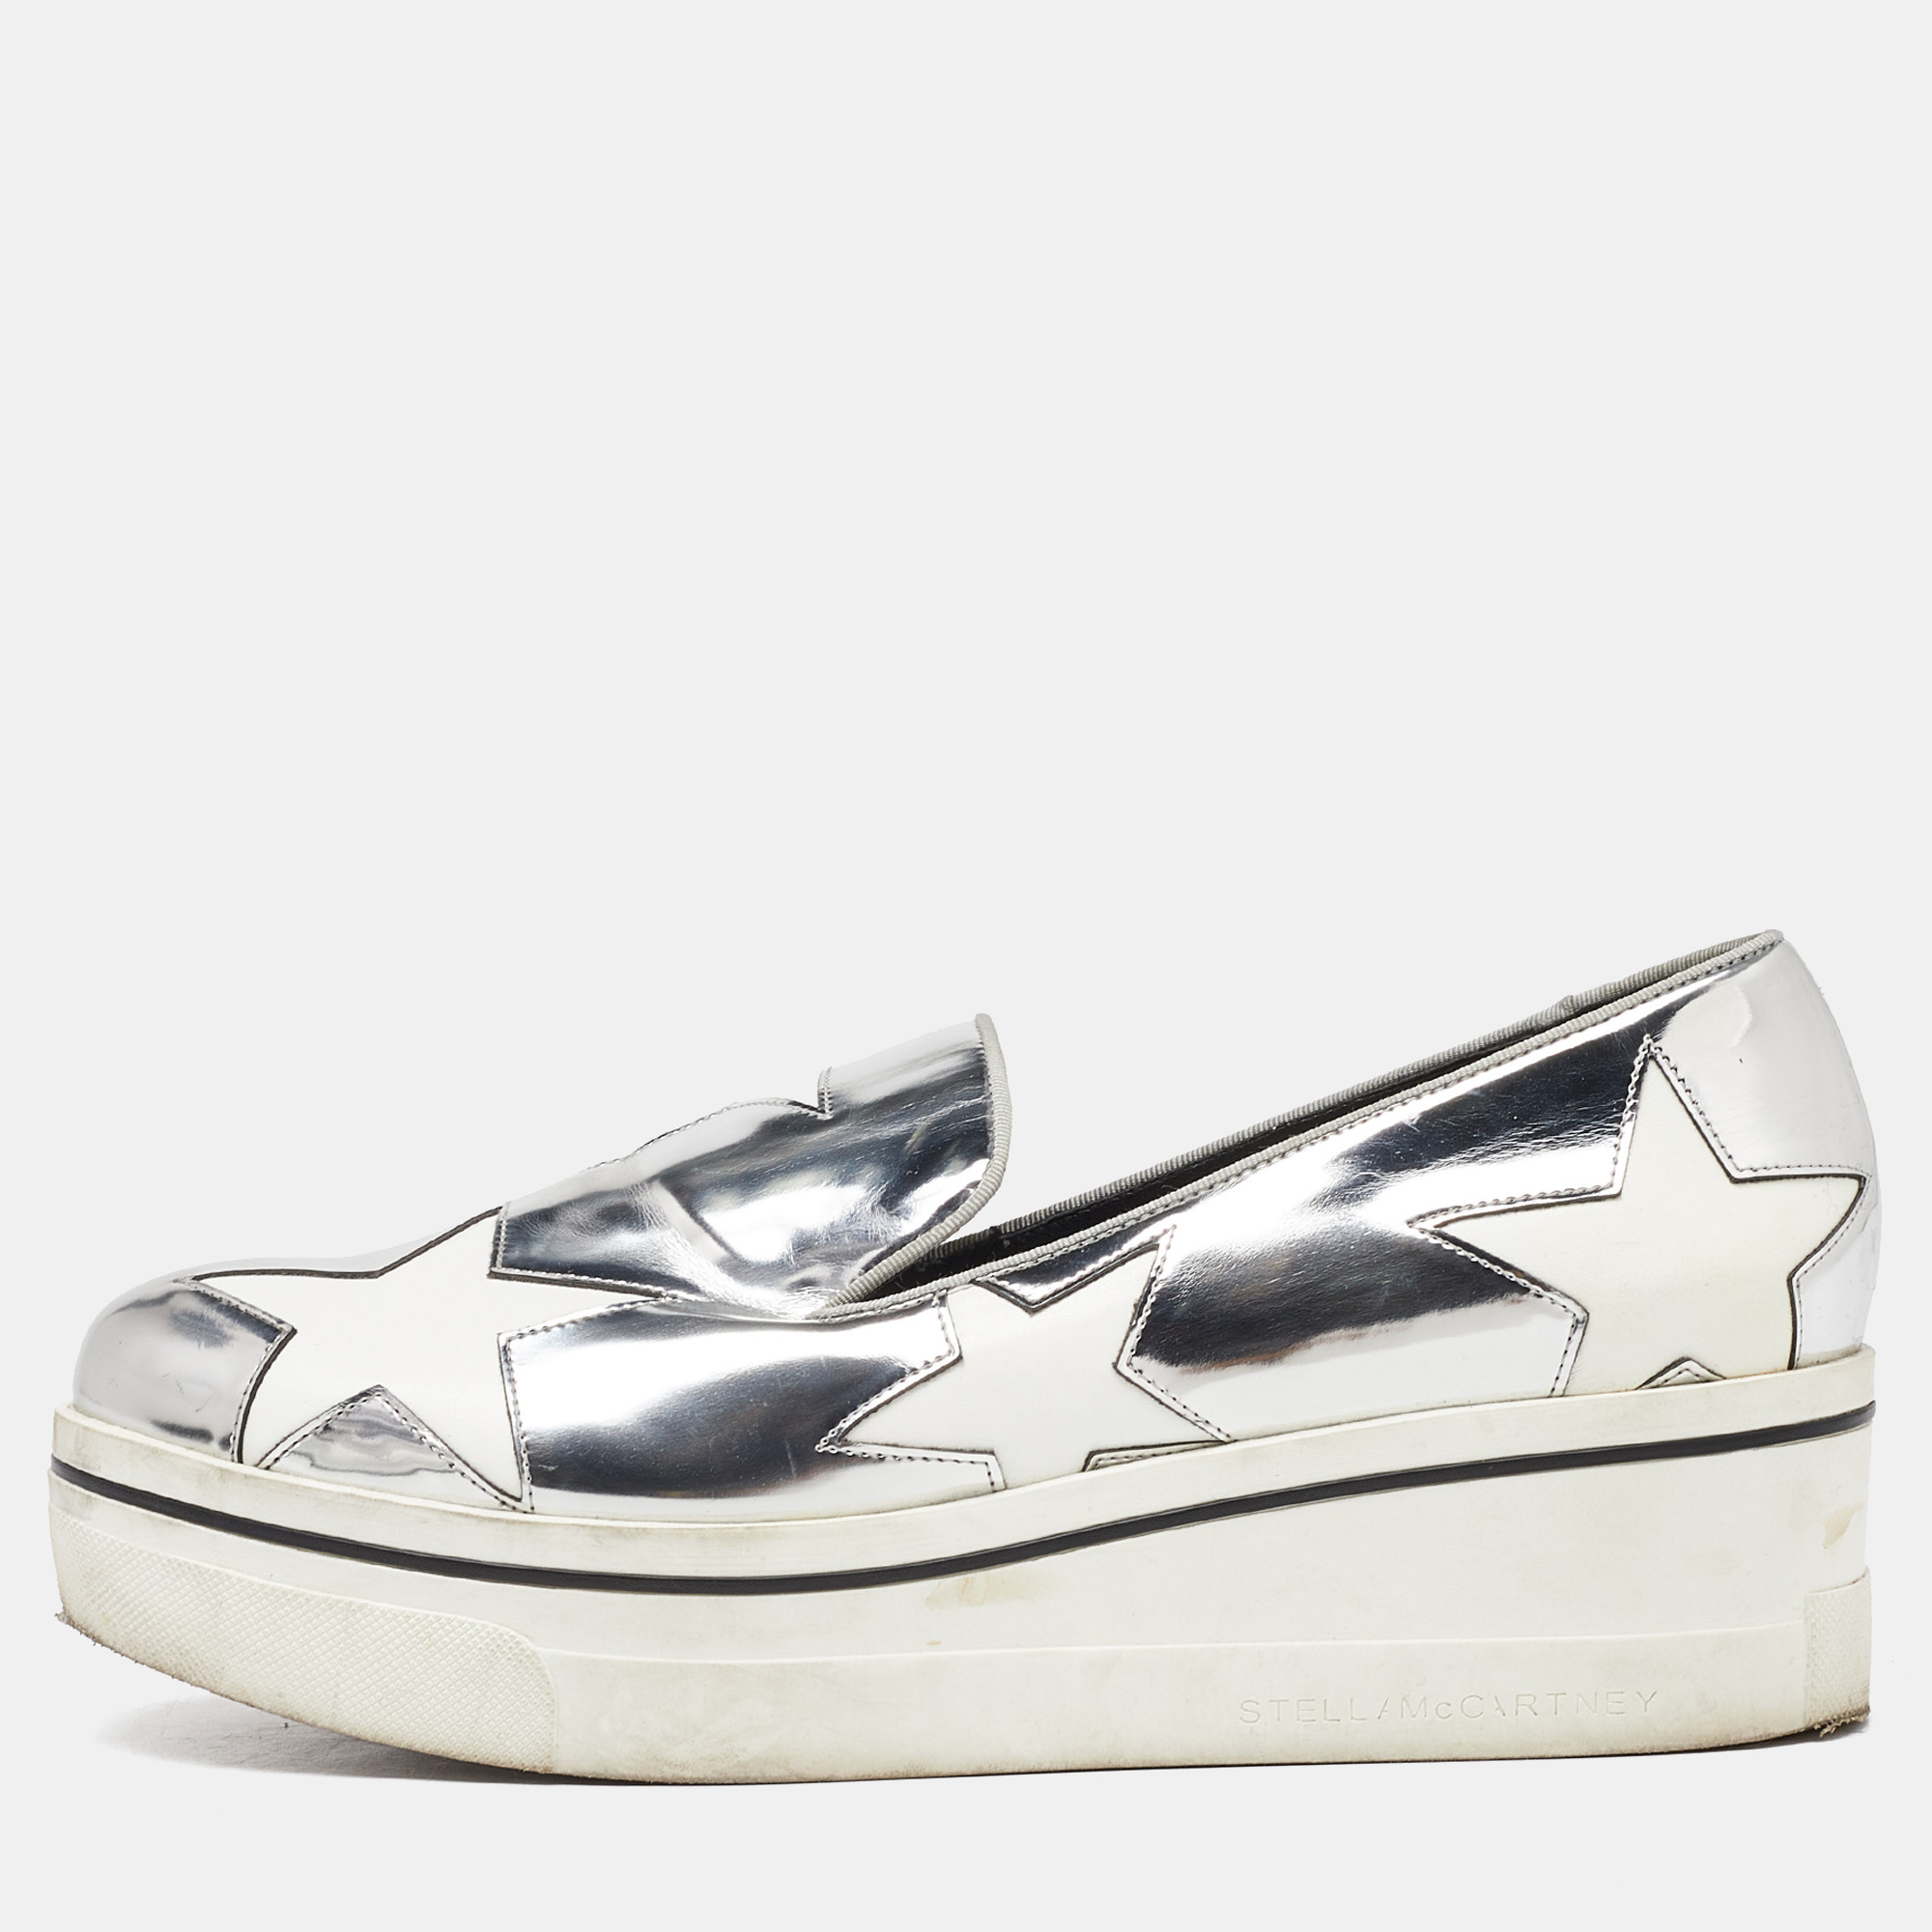 Stella mccartney white/silver faux leather star platform binx slip on sneakers size 40